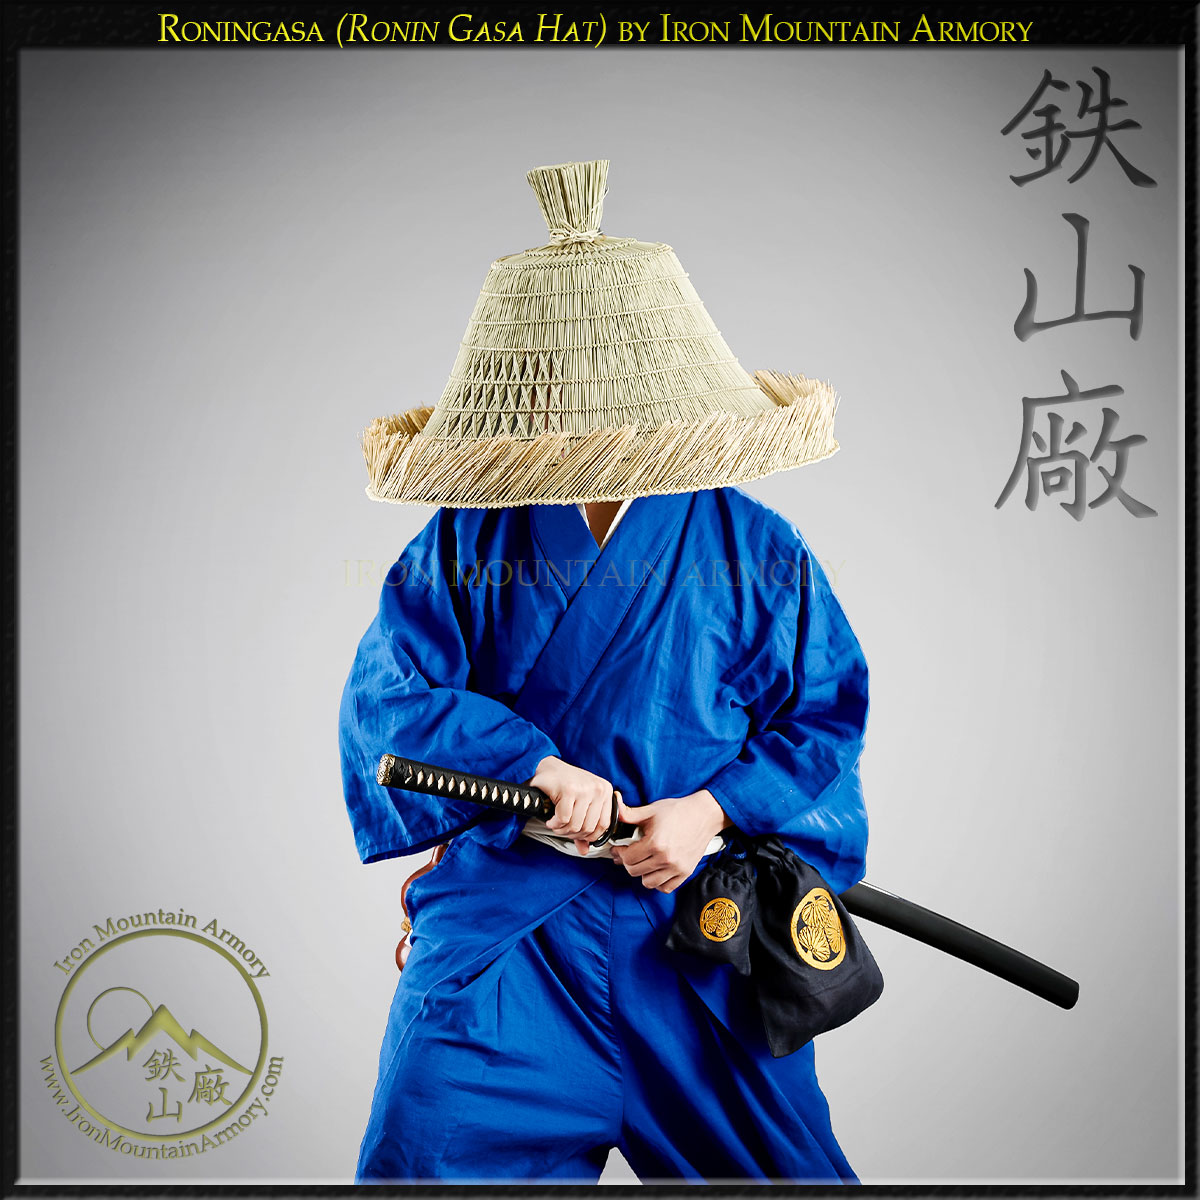 https://shop.samurai-armor.com/wp-content/uploads/2021/12/Roningasa-Ronin-Gasa-Hat-21b-by-Iron-Mountain-Armory.jpg